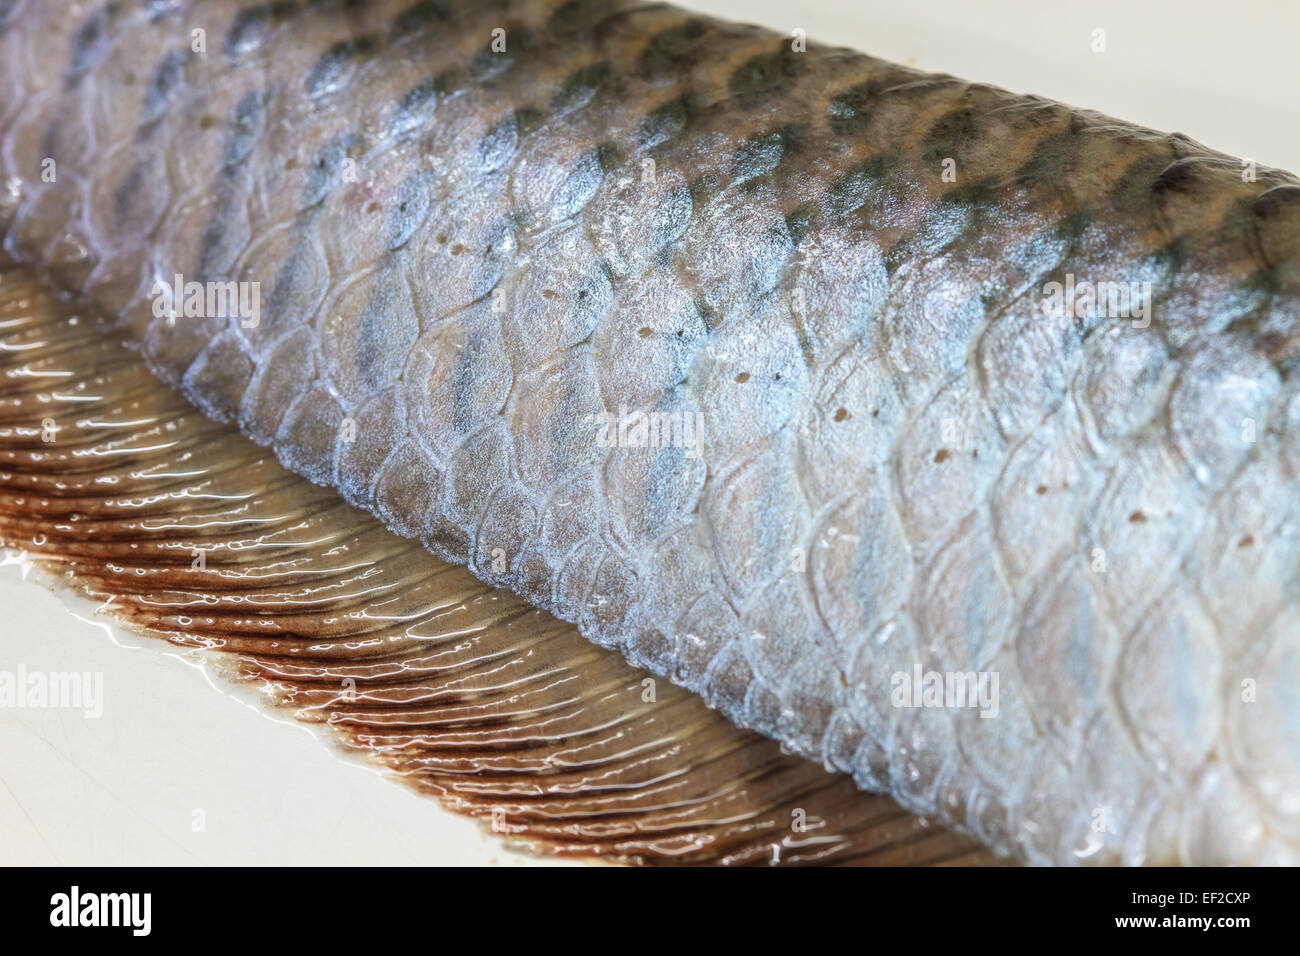 Arowana Scale, Scales of fresh water fish close up Stock Photo